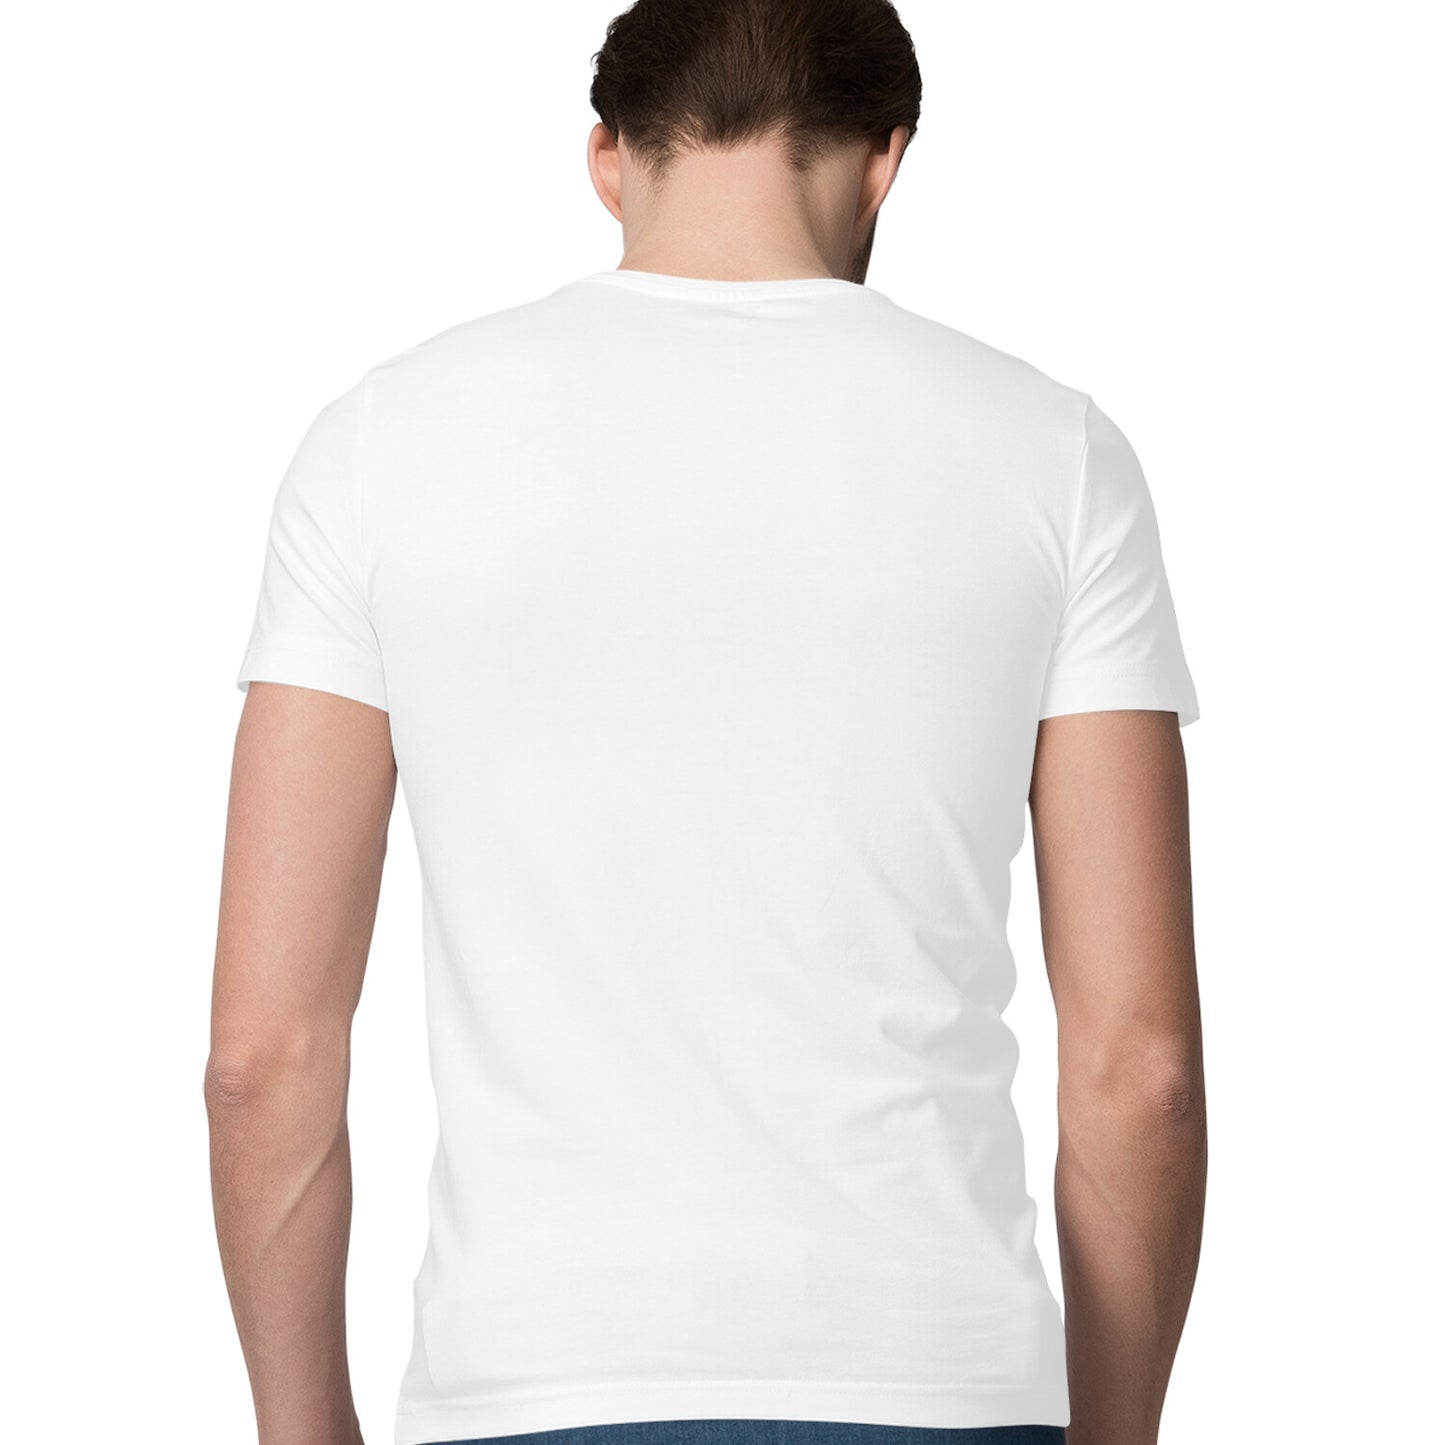 Sunday - Sleek Designs T-shirt - Men's